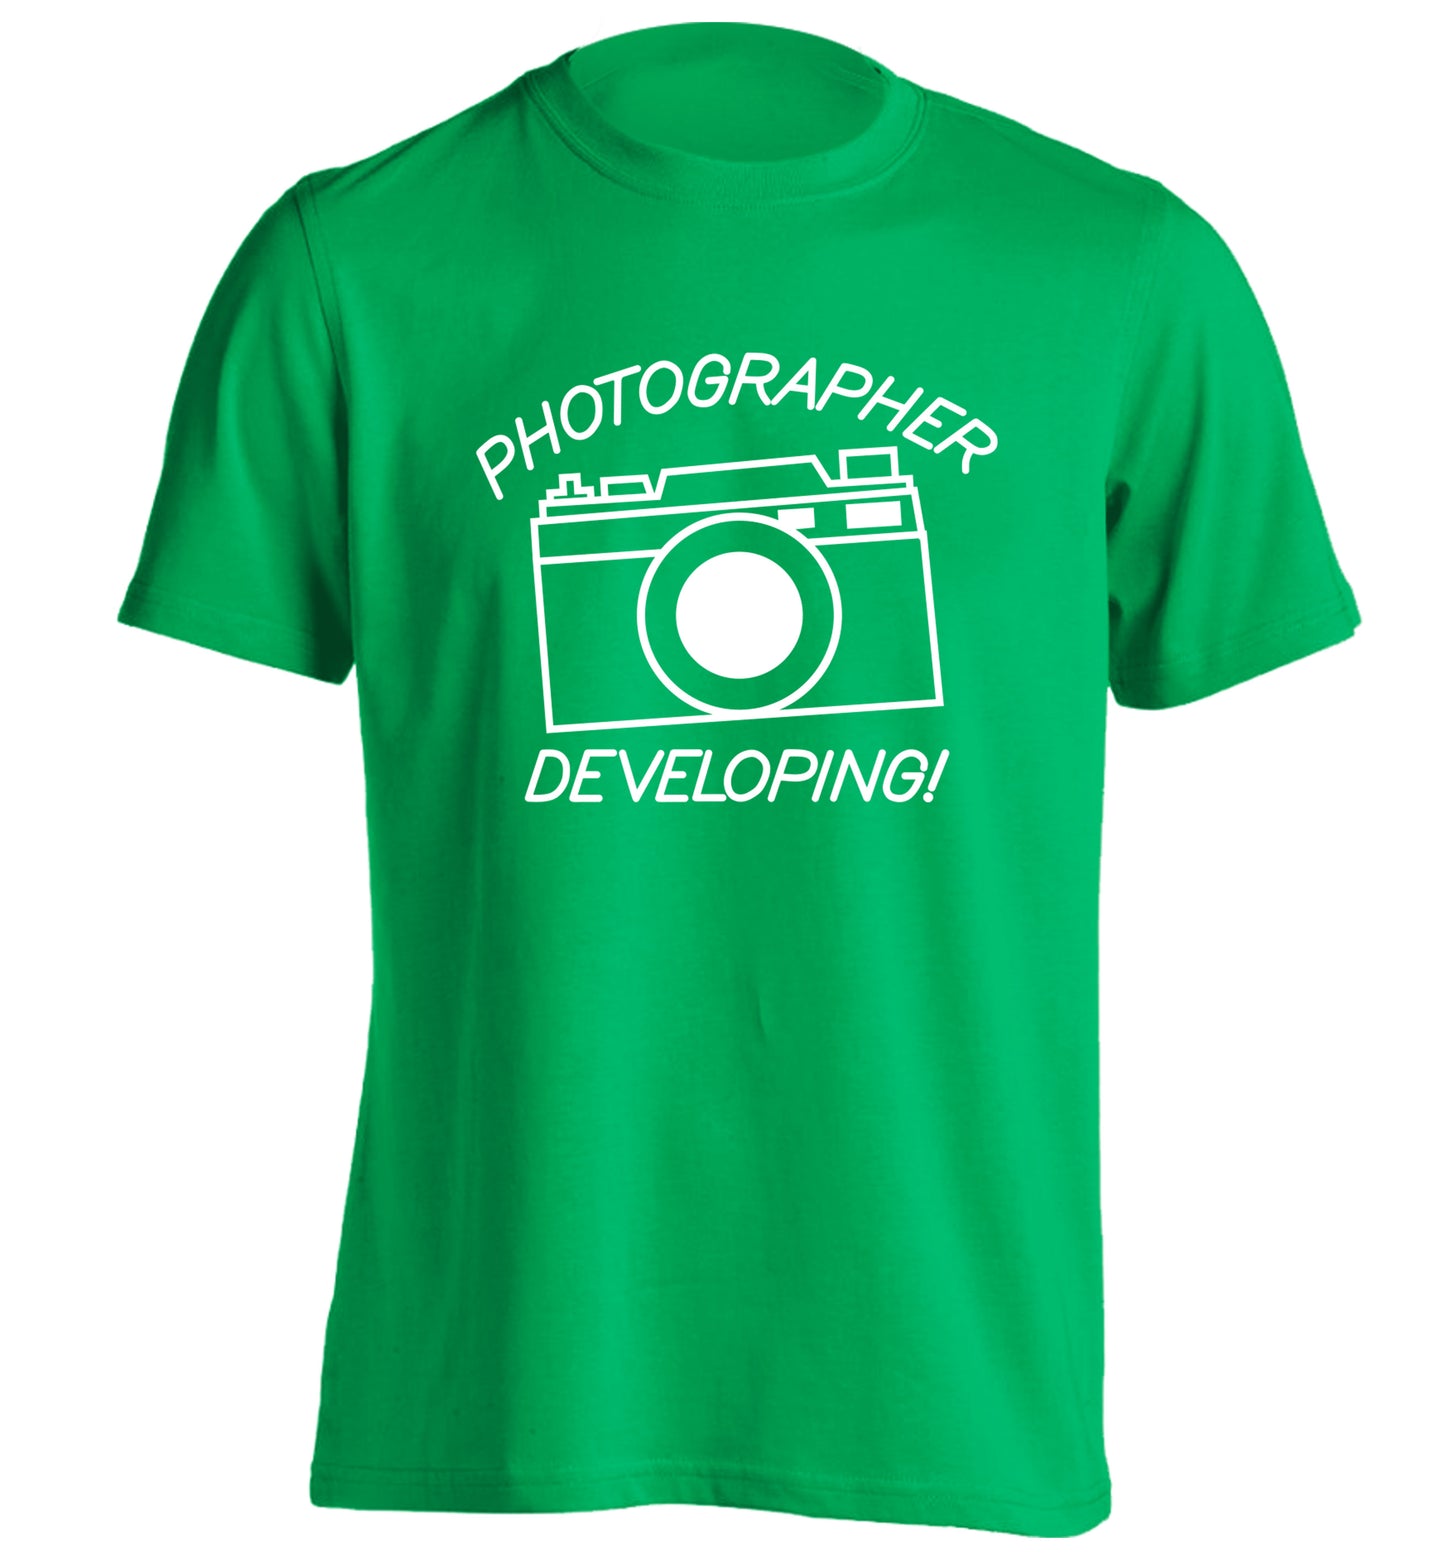 Photographer Developing  adults unisex green Tshirt 2XL